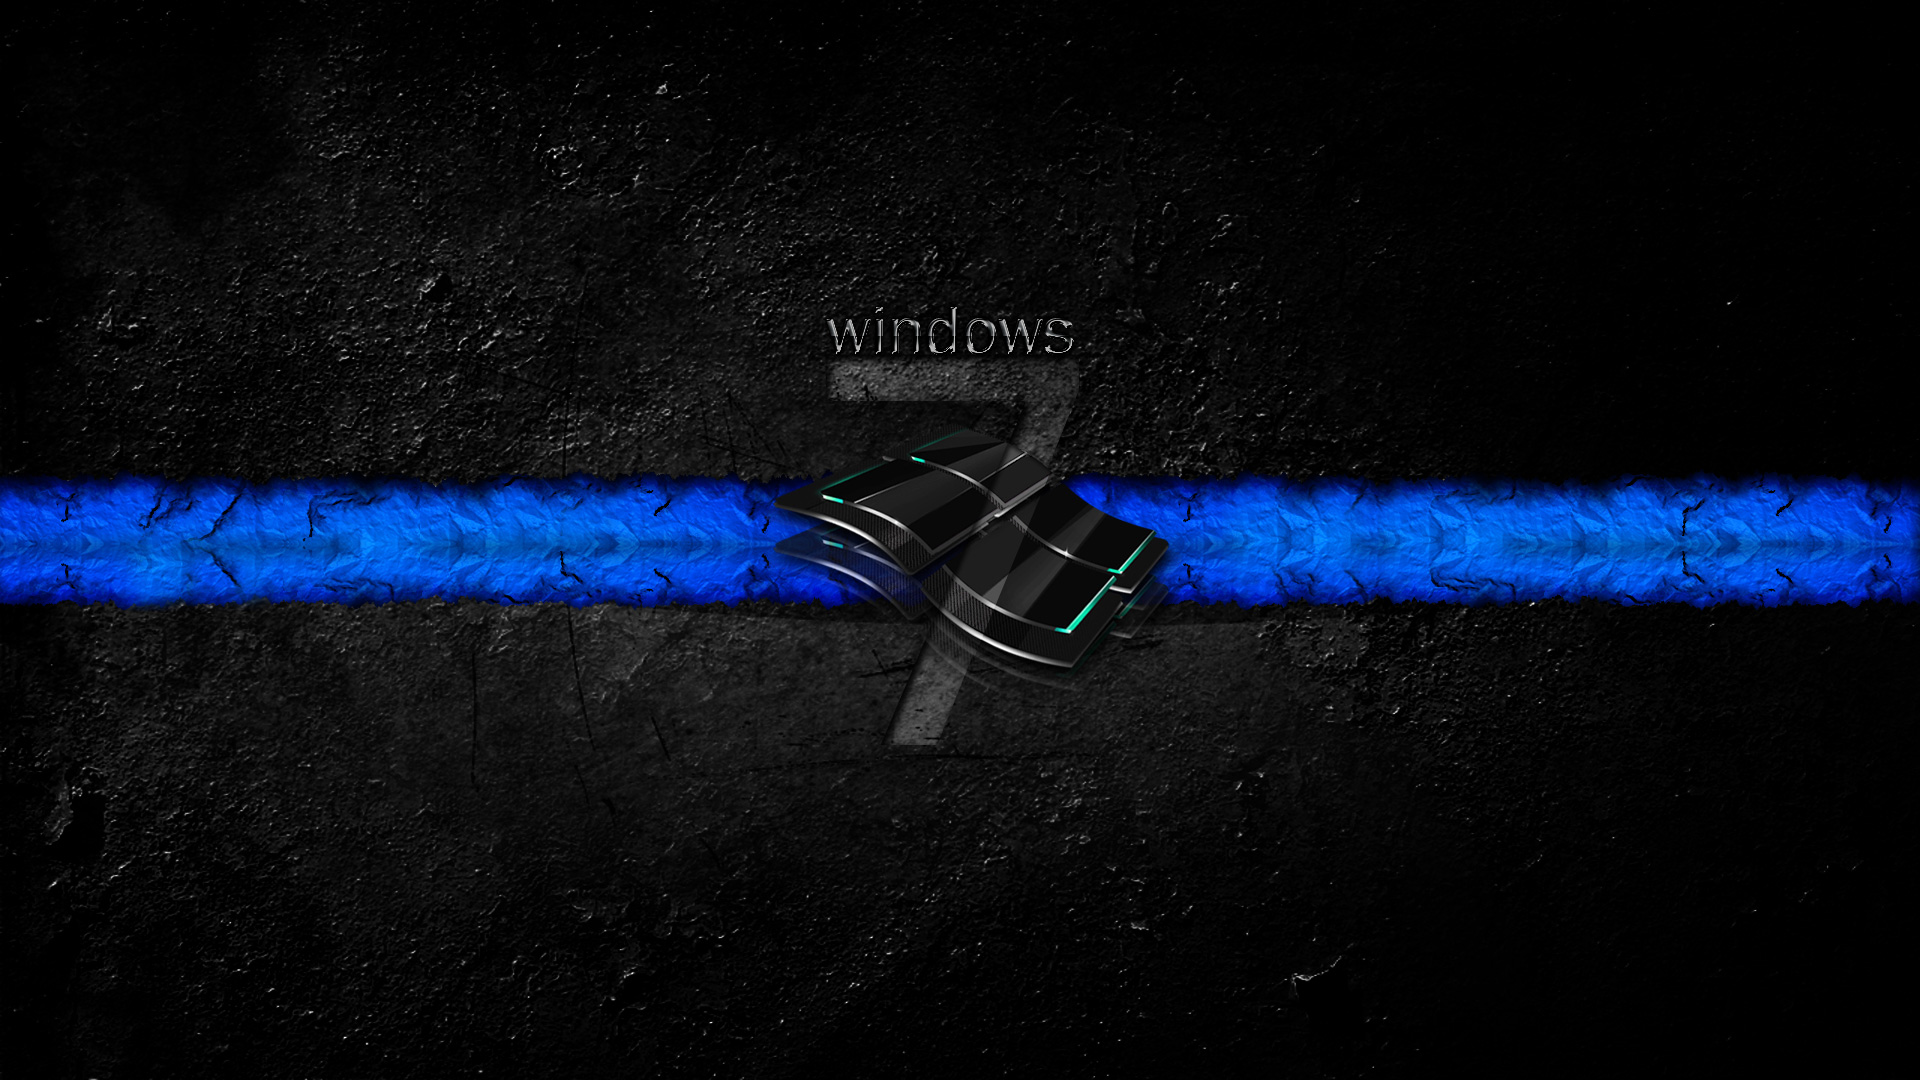 windows 7 wallpaper black and blue